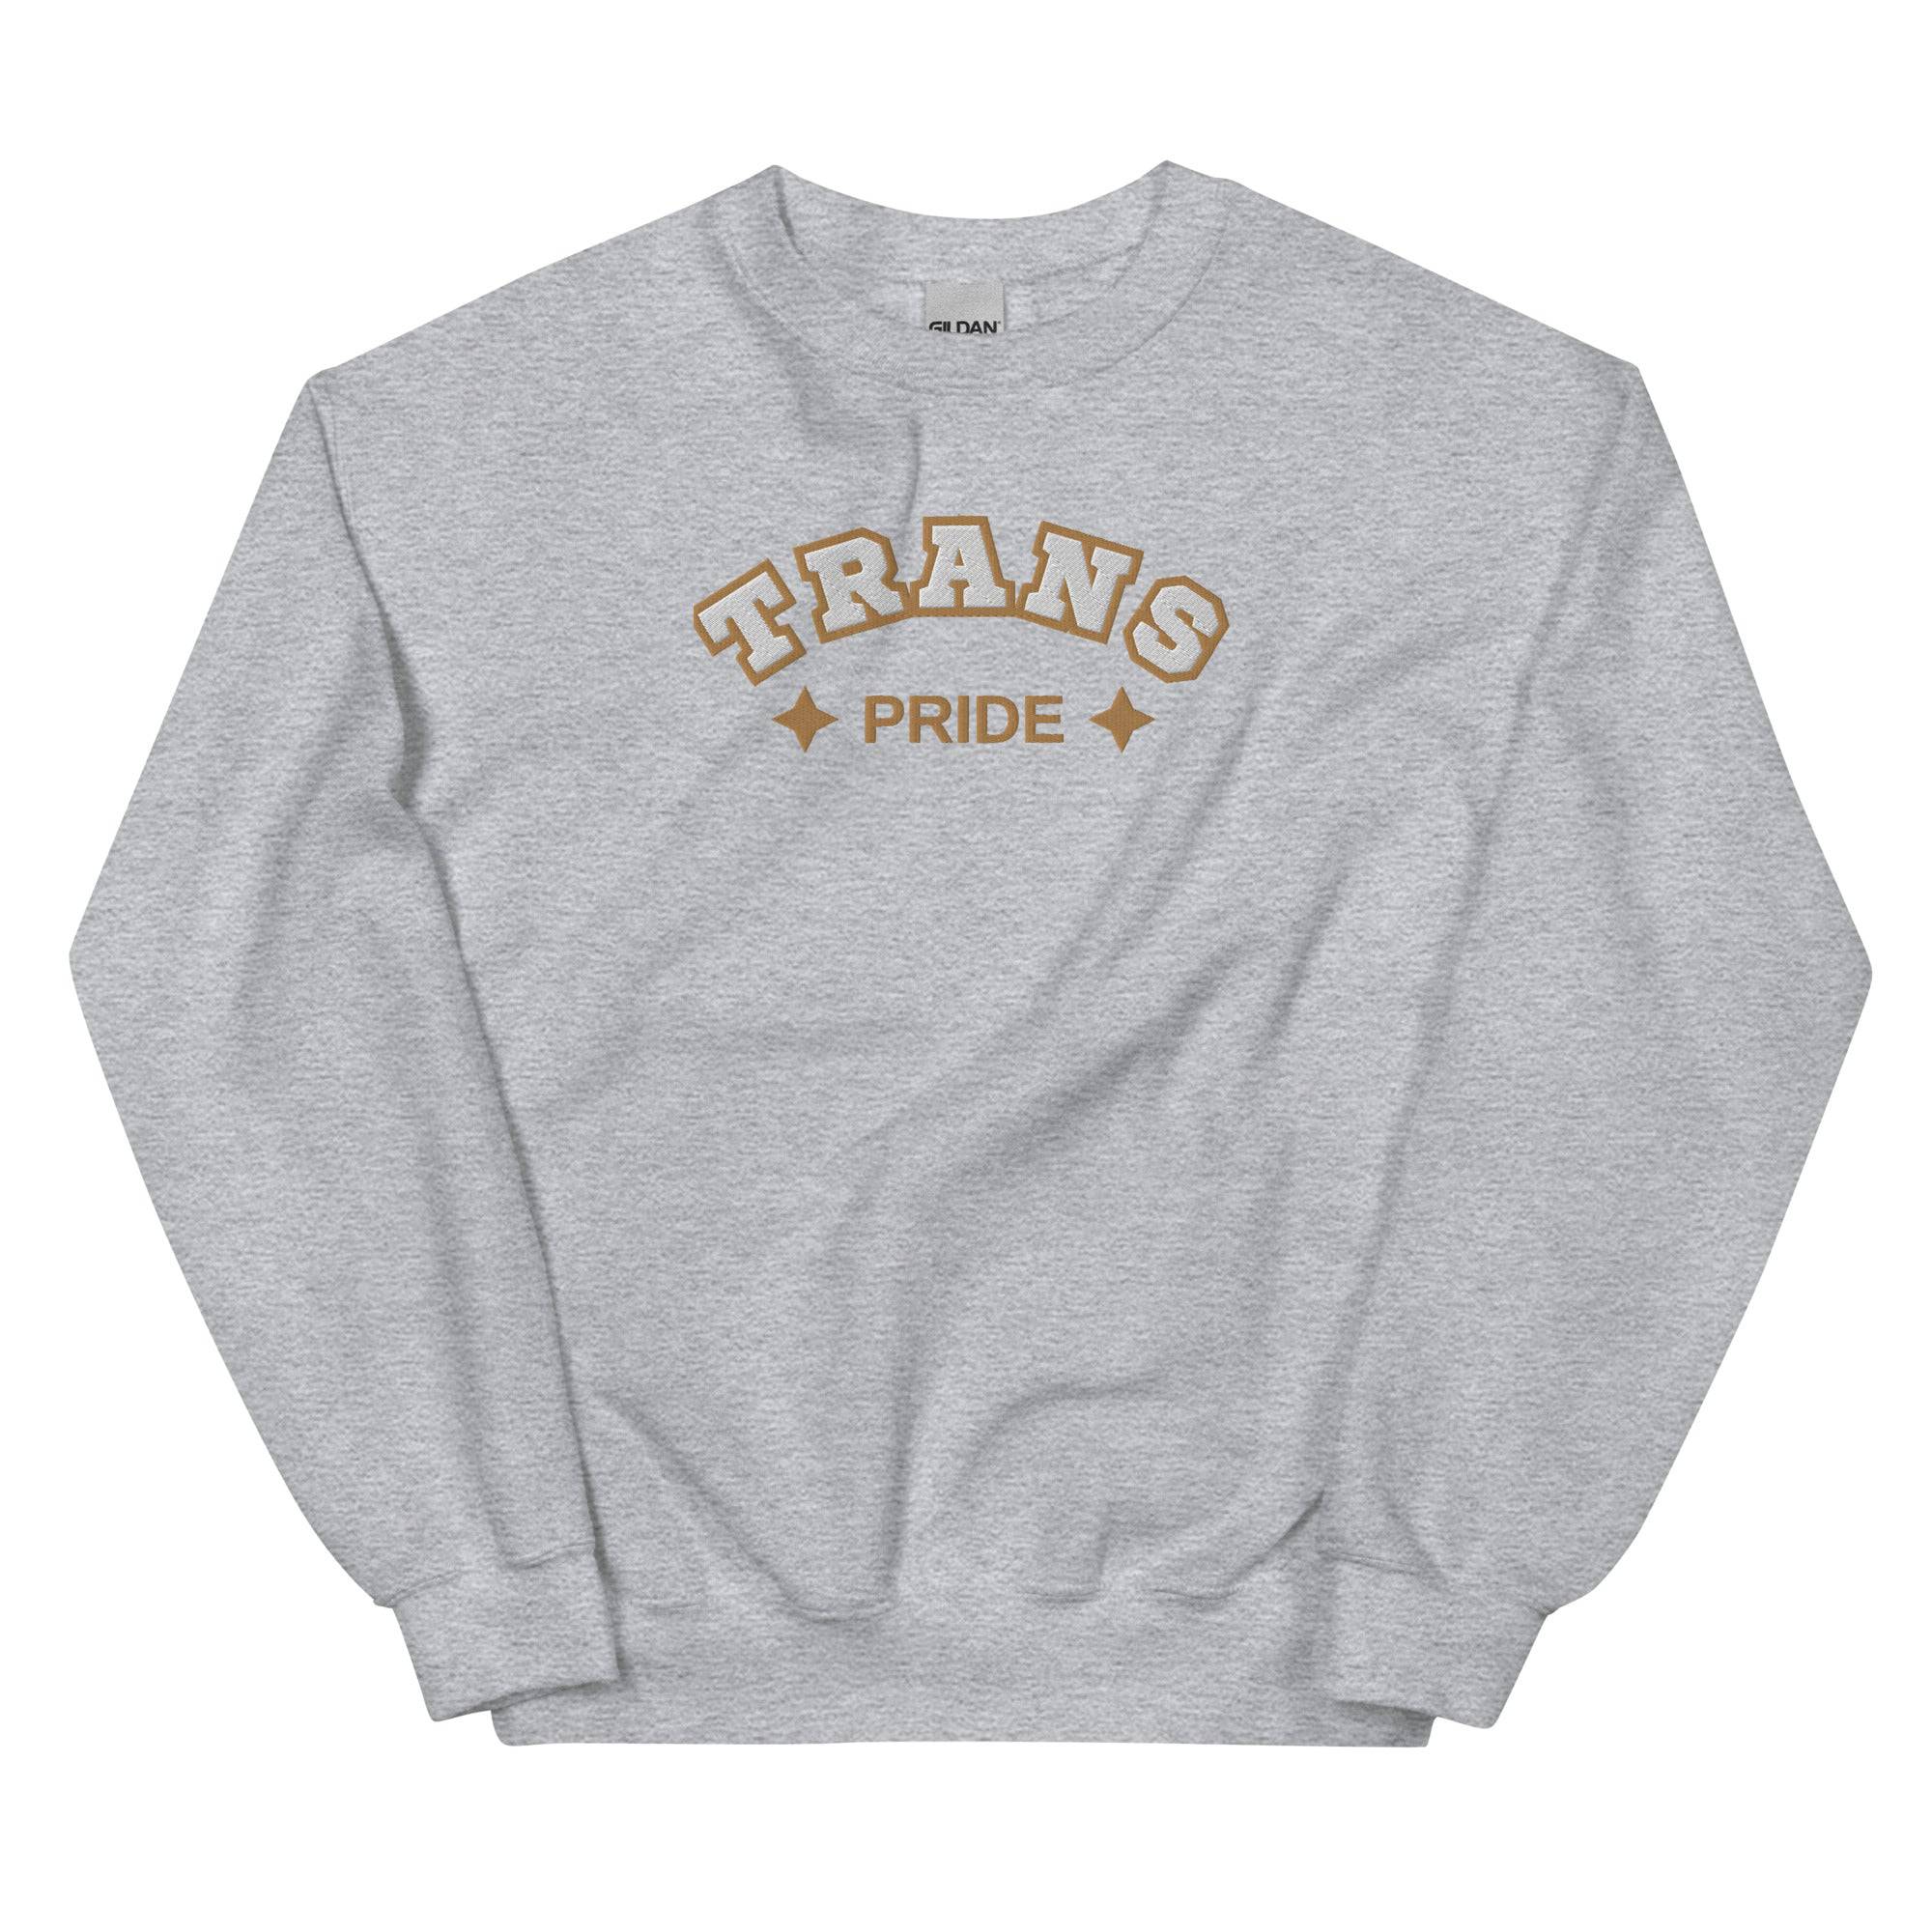 Trans Pride Embroidered Unisex Sweatshirt - Rose Gold Co. Shop